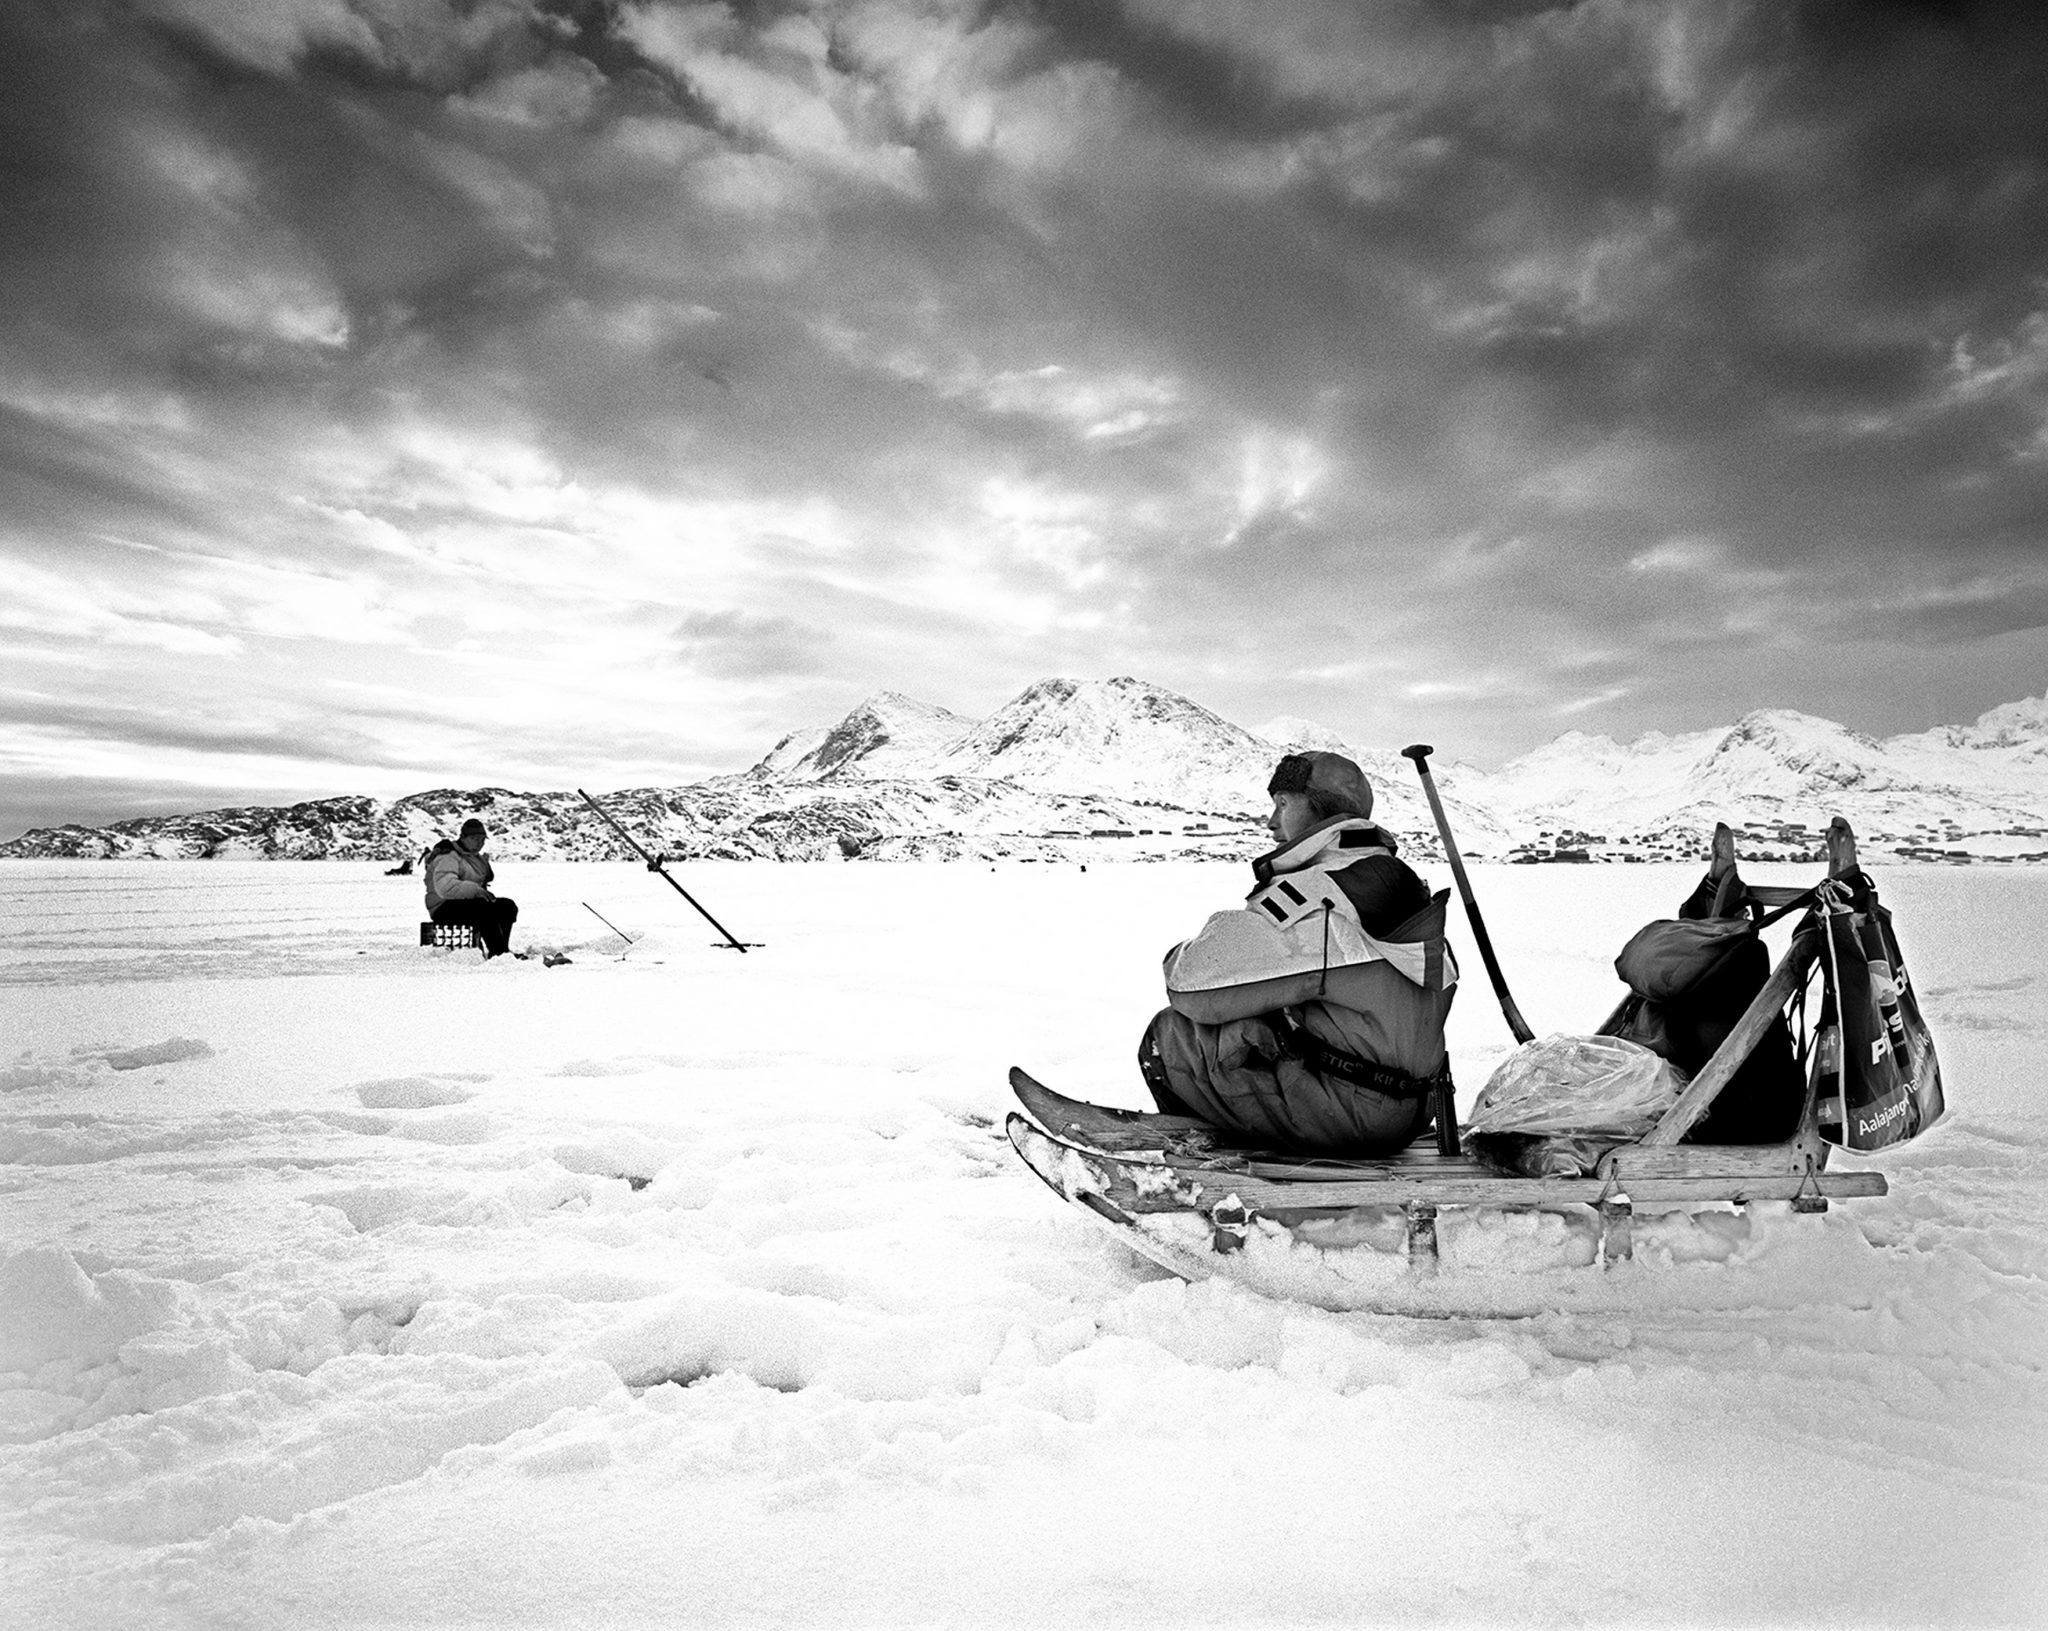 Tasiilaaq, Greenland ©Paolo Solari Bozzi